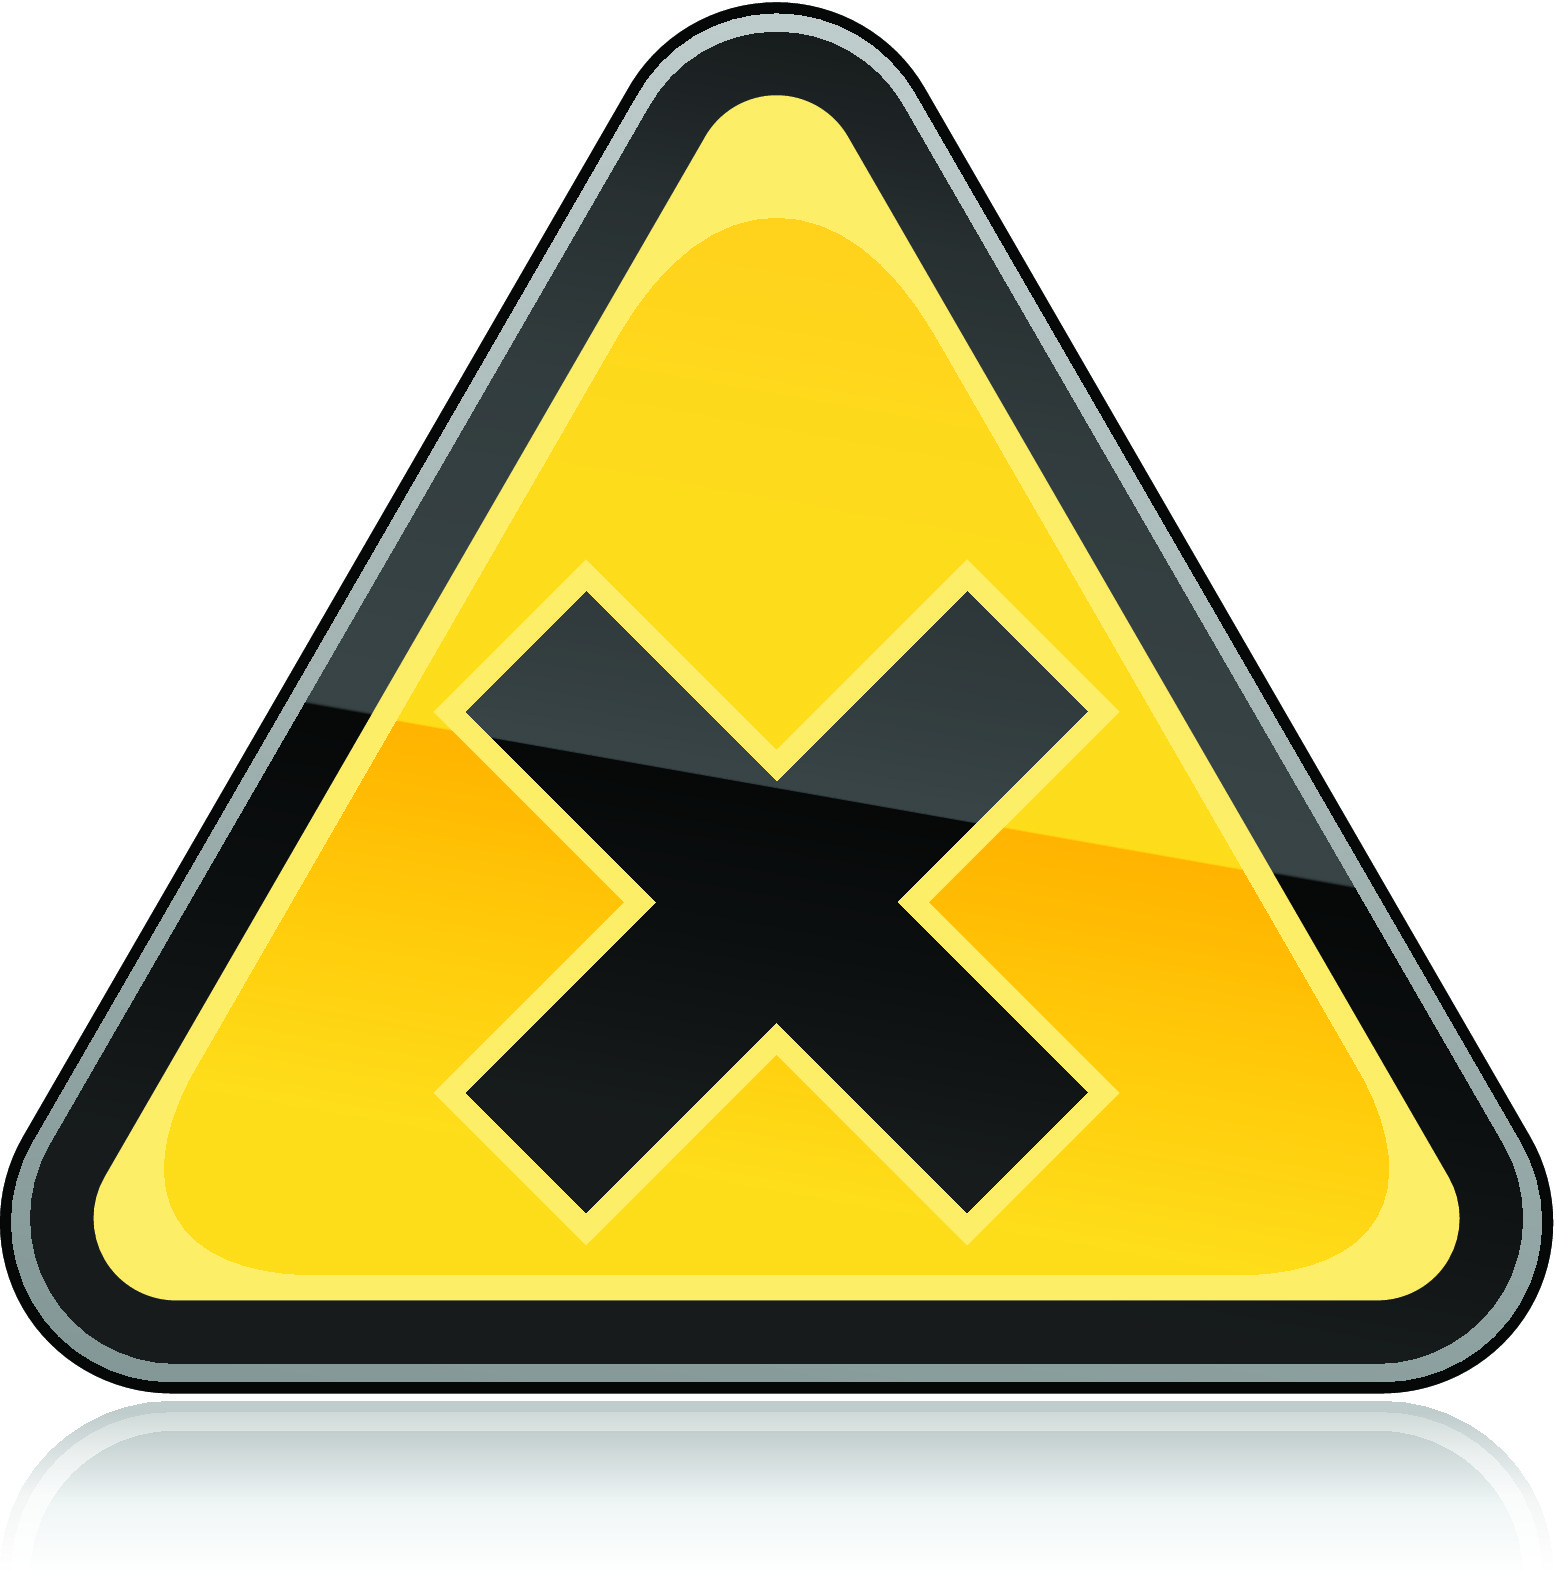 Harmful hazard symbol